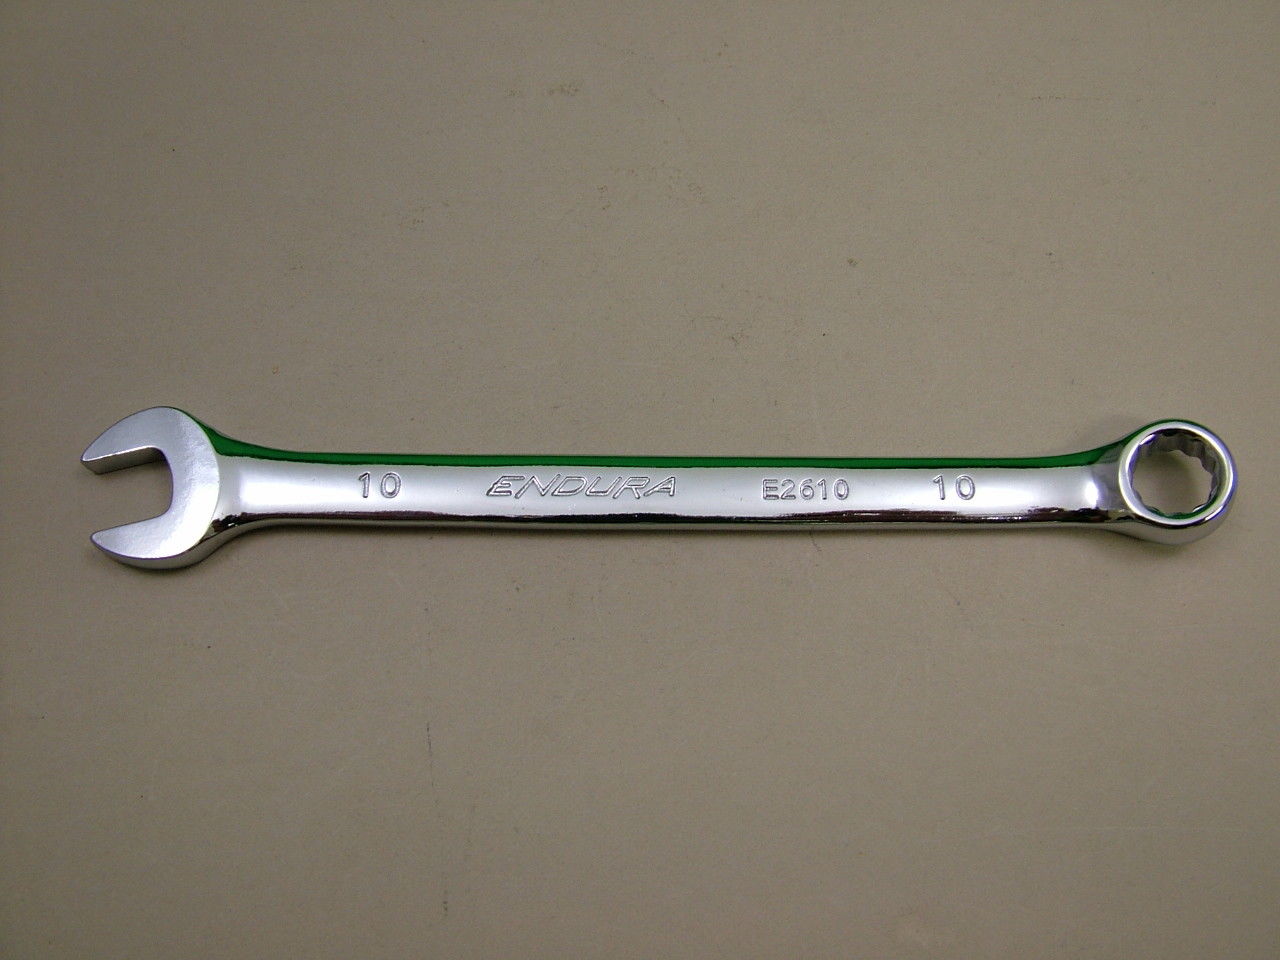 Combination spanner10mm chrome vanadium steel, Endura brand 10mm - Click Image to Close